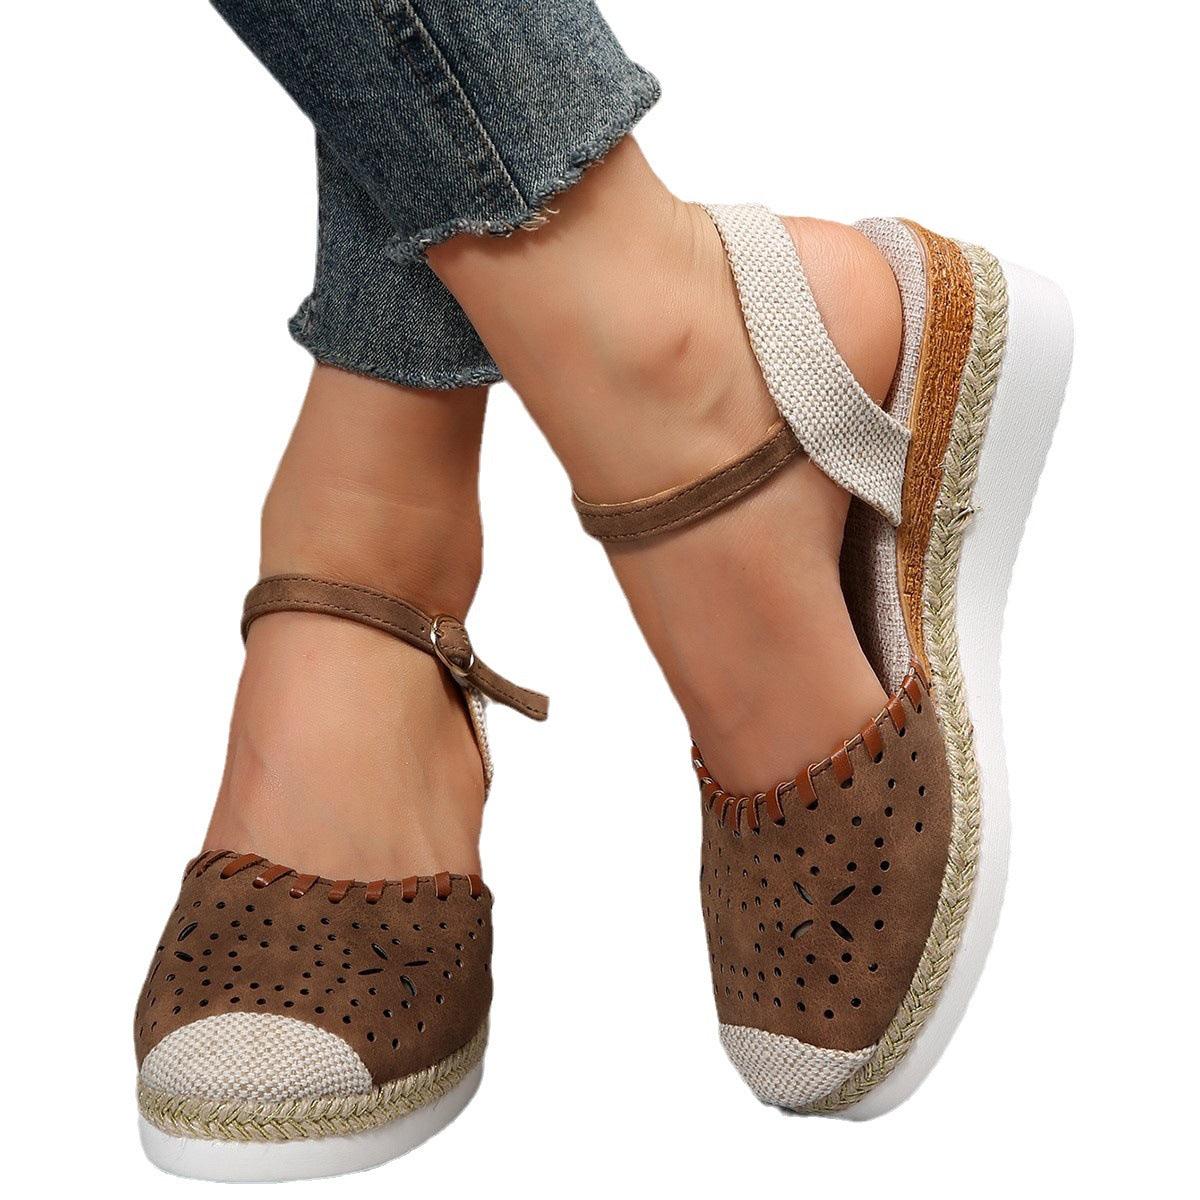 Women's Fashion Platform Casual Wedge Sandals Shoes & Bags